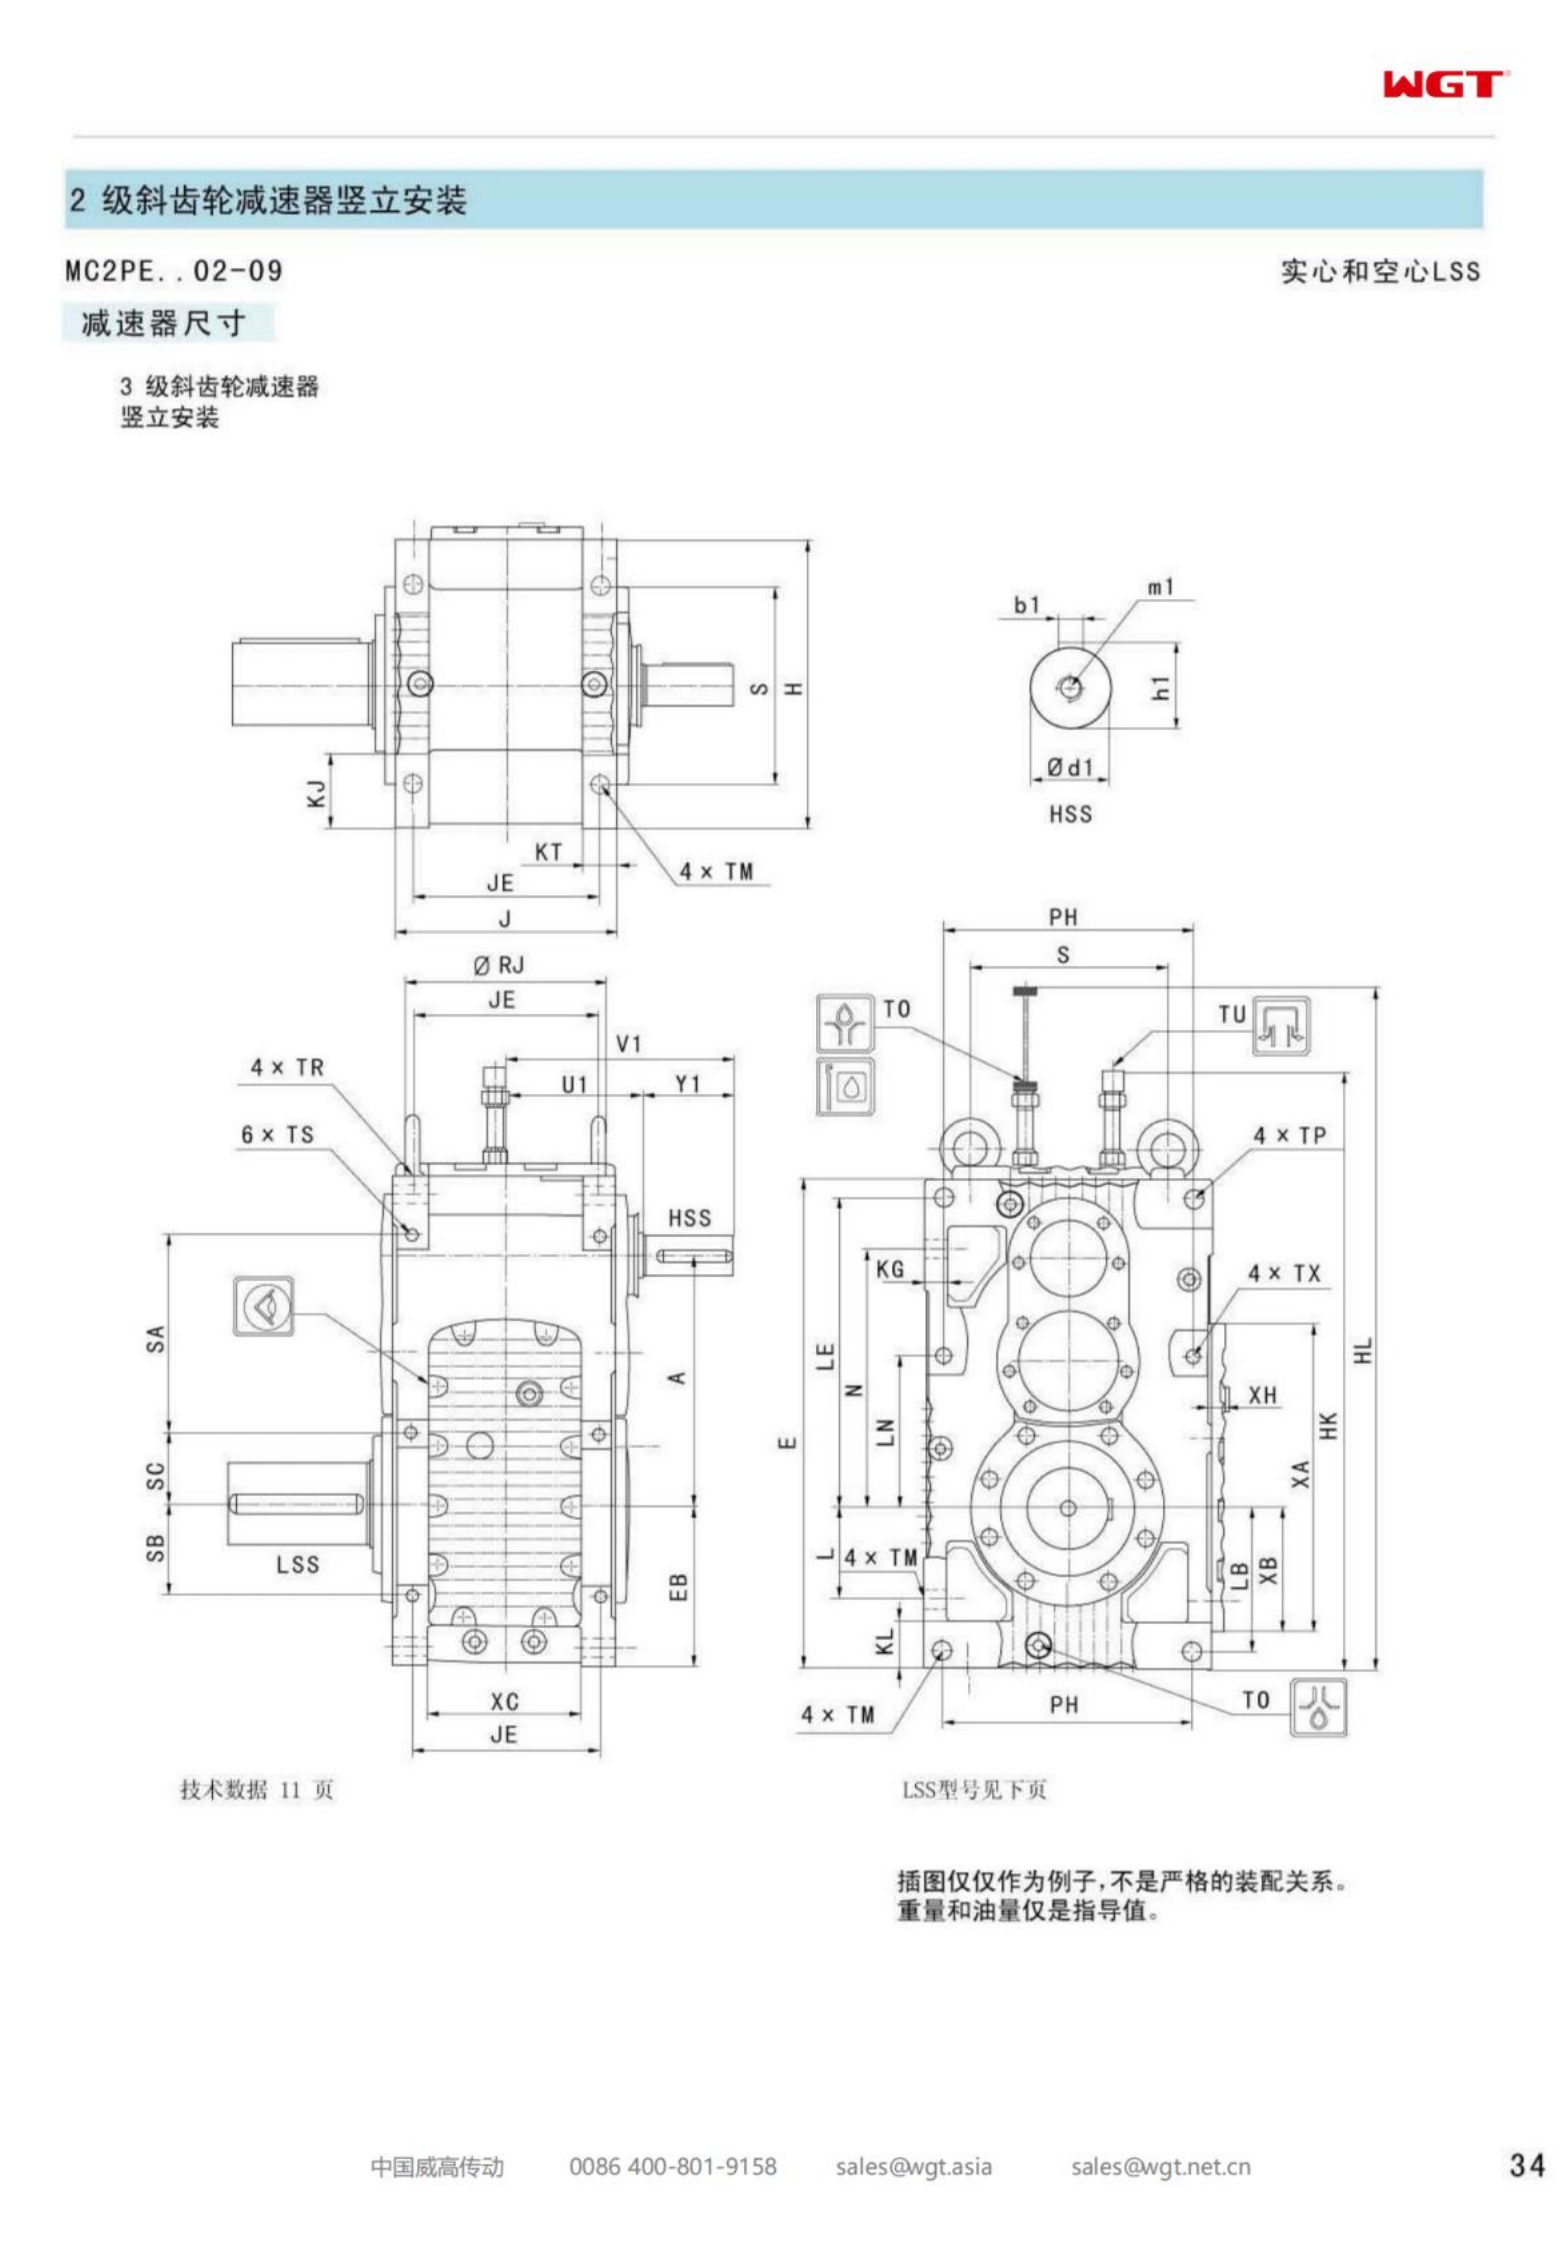 MC2PEHF07 replaces _SEW_MC_Series gearbox (patent)